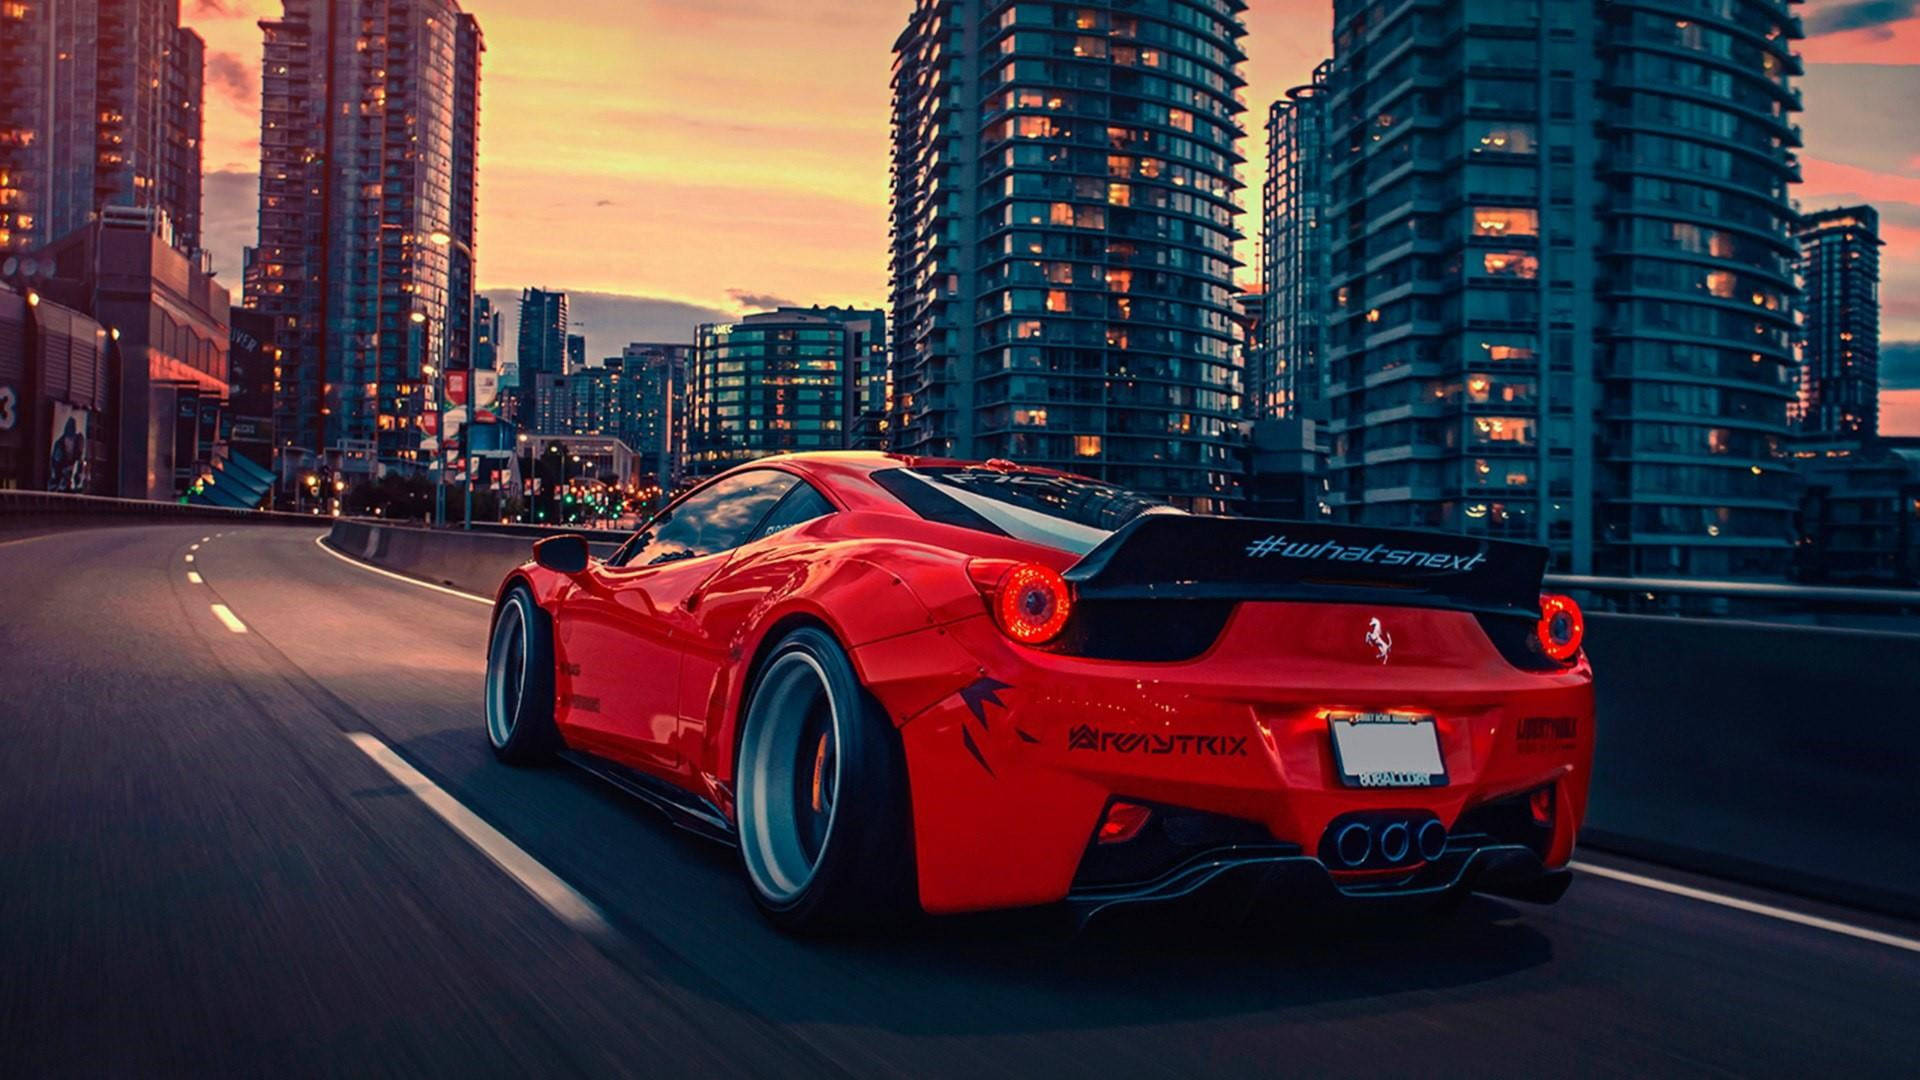 Red Ferrari Racing Car In City Background